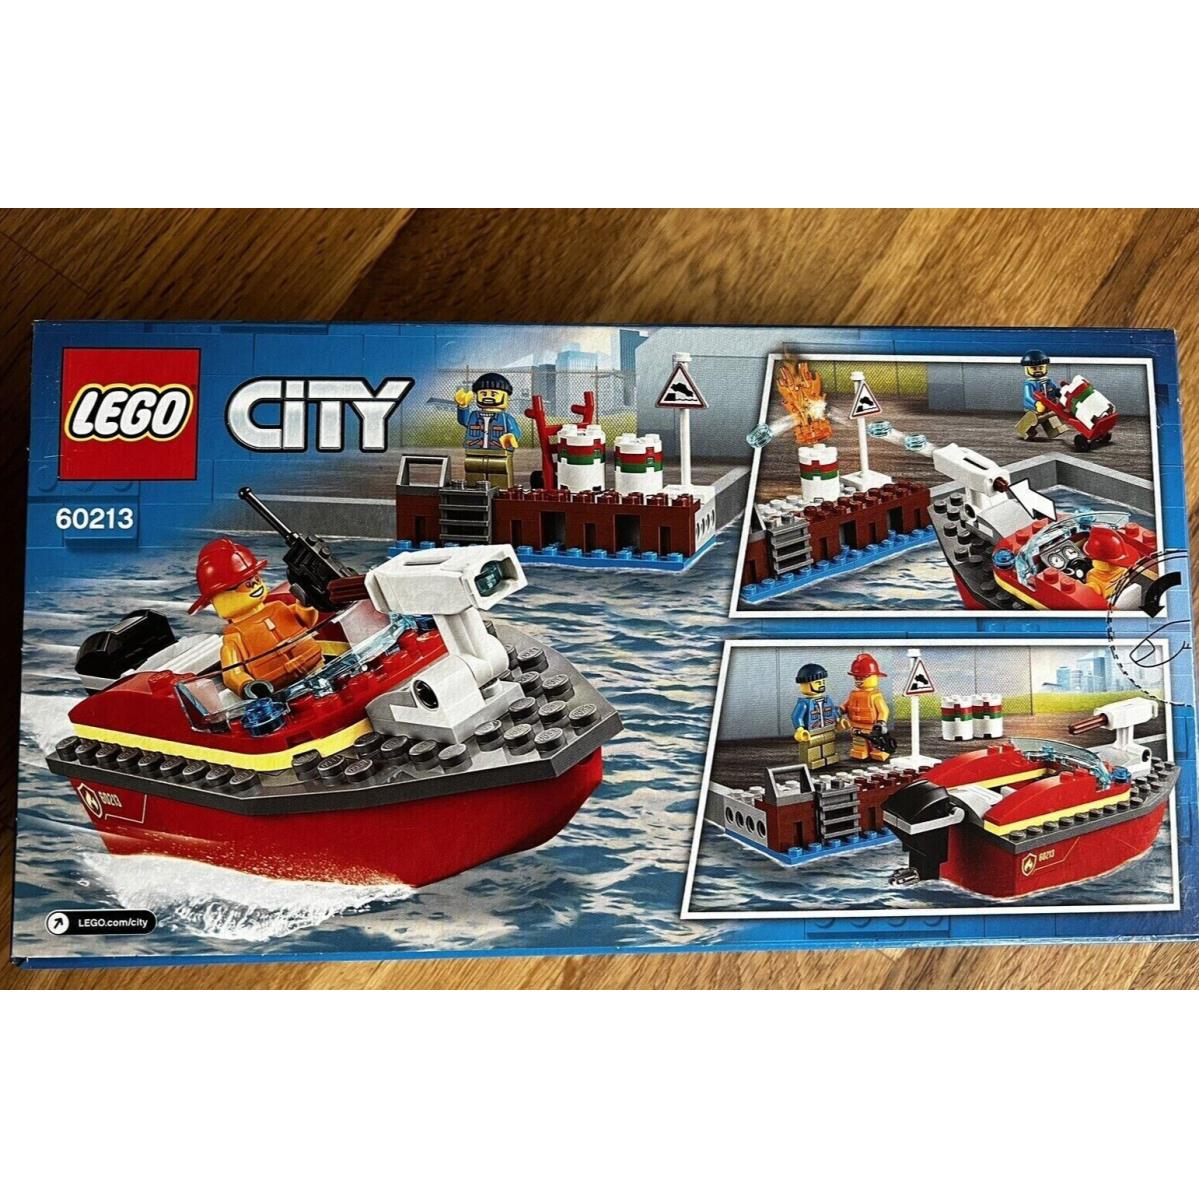 Lego City Dock Side Fire Set 60213 Building Kit 97 Pcs Retired Set Playset